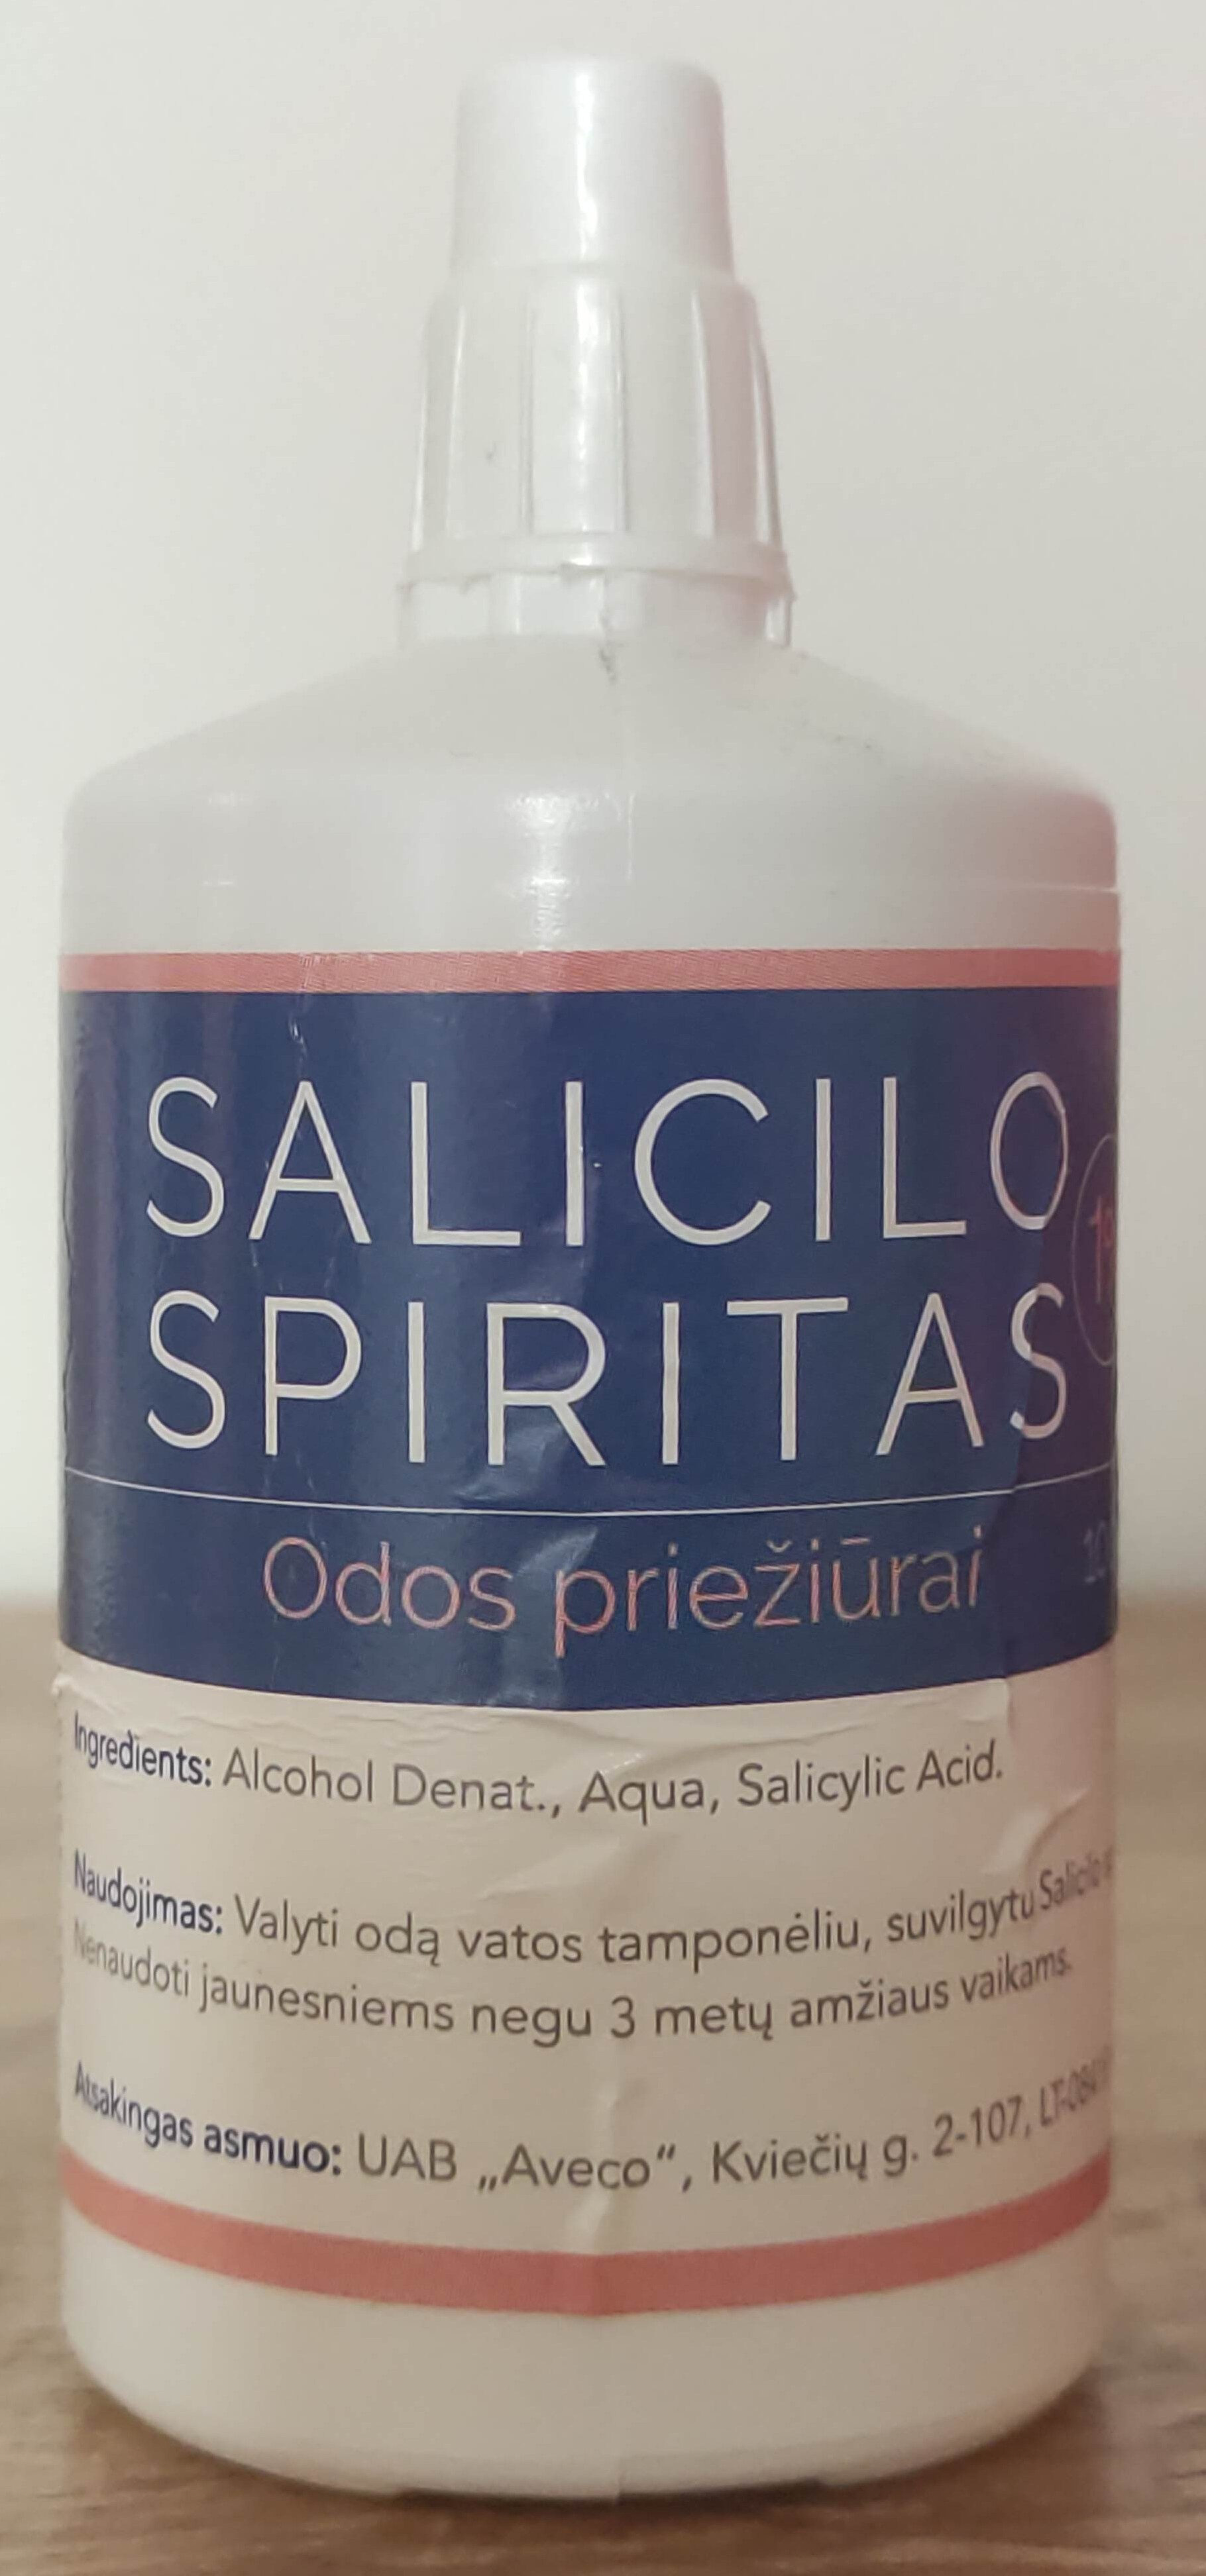 Salicilo spiritas - Produto - lt